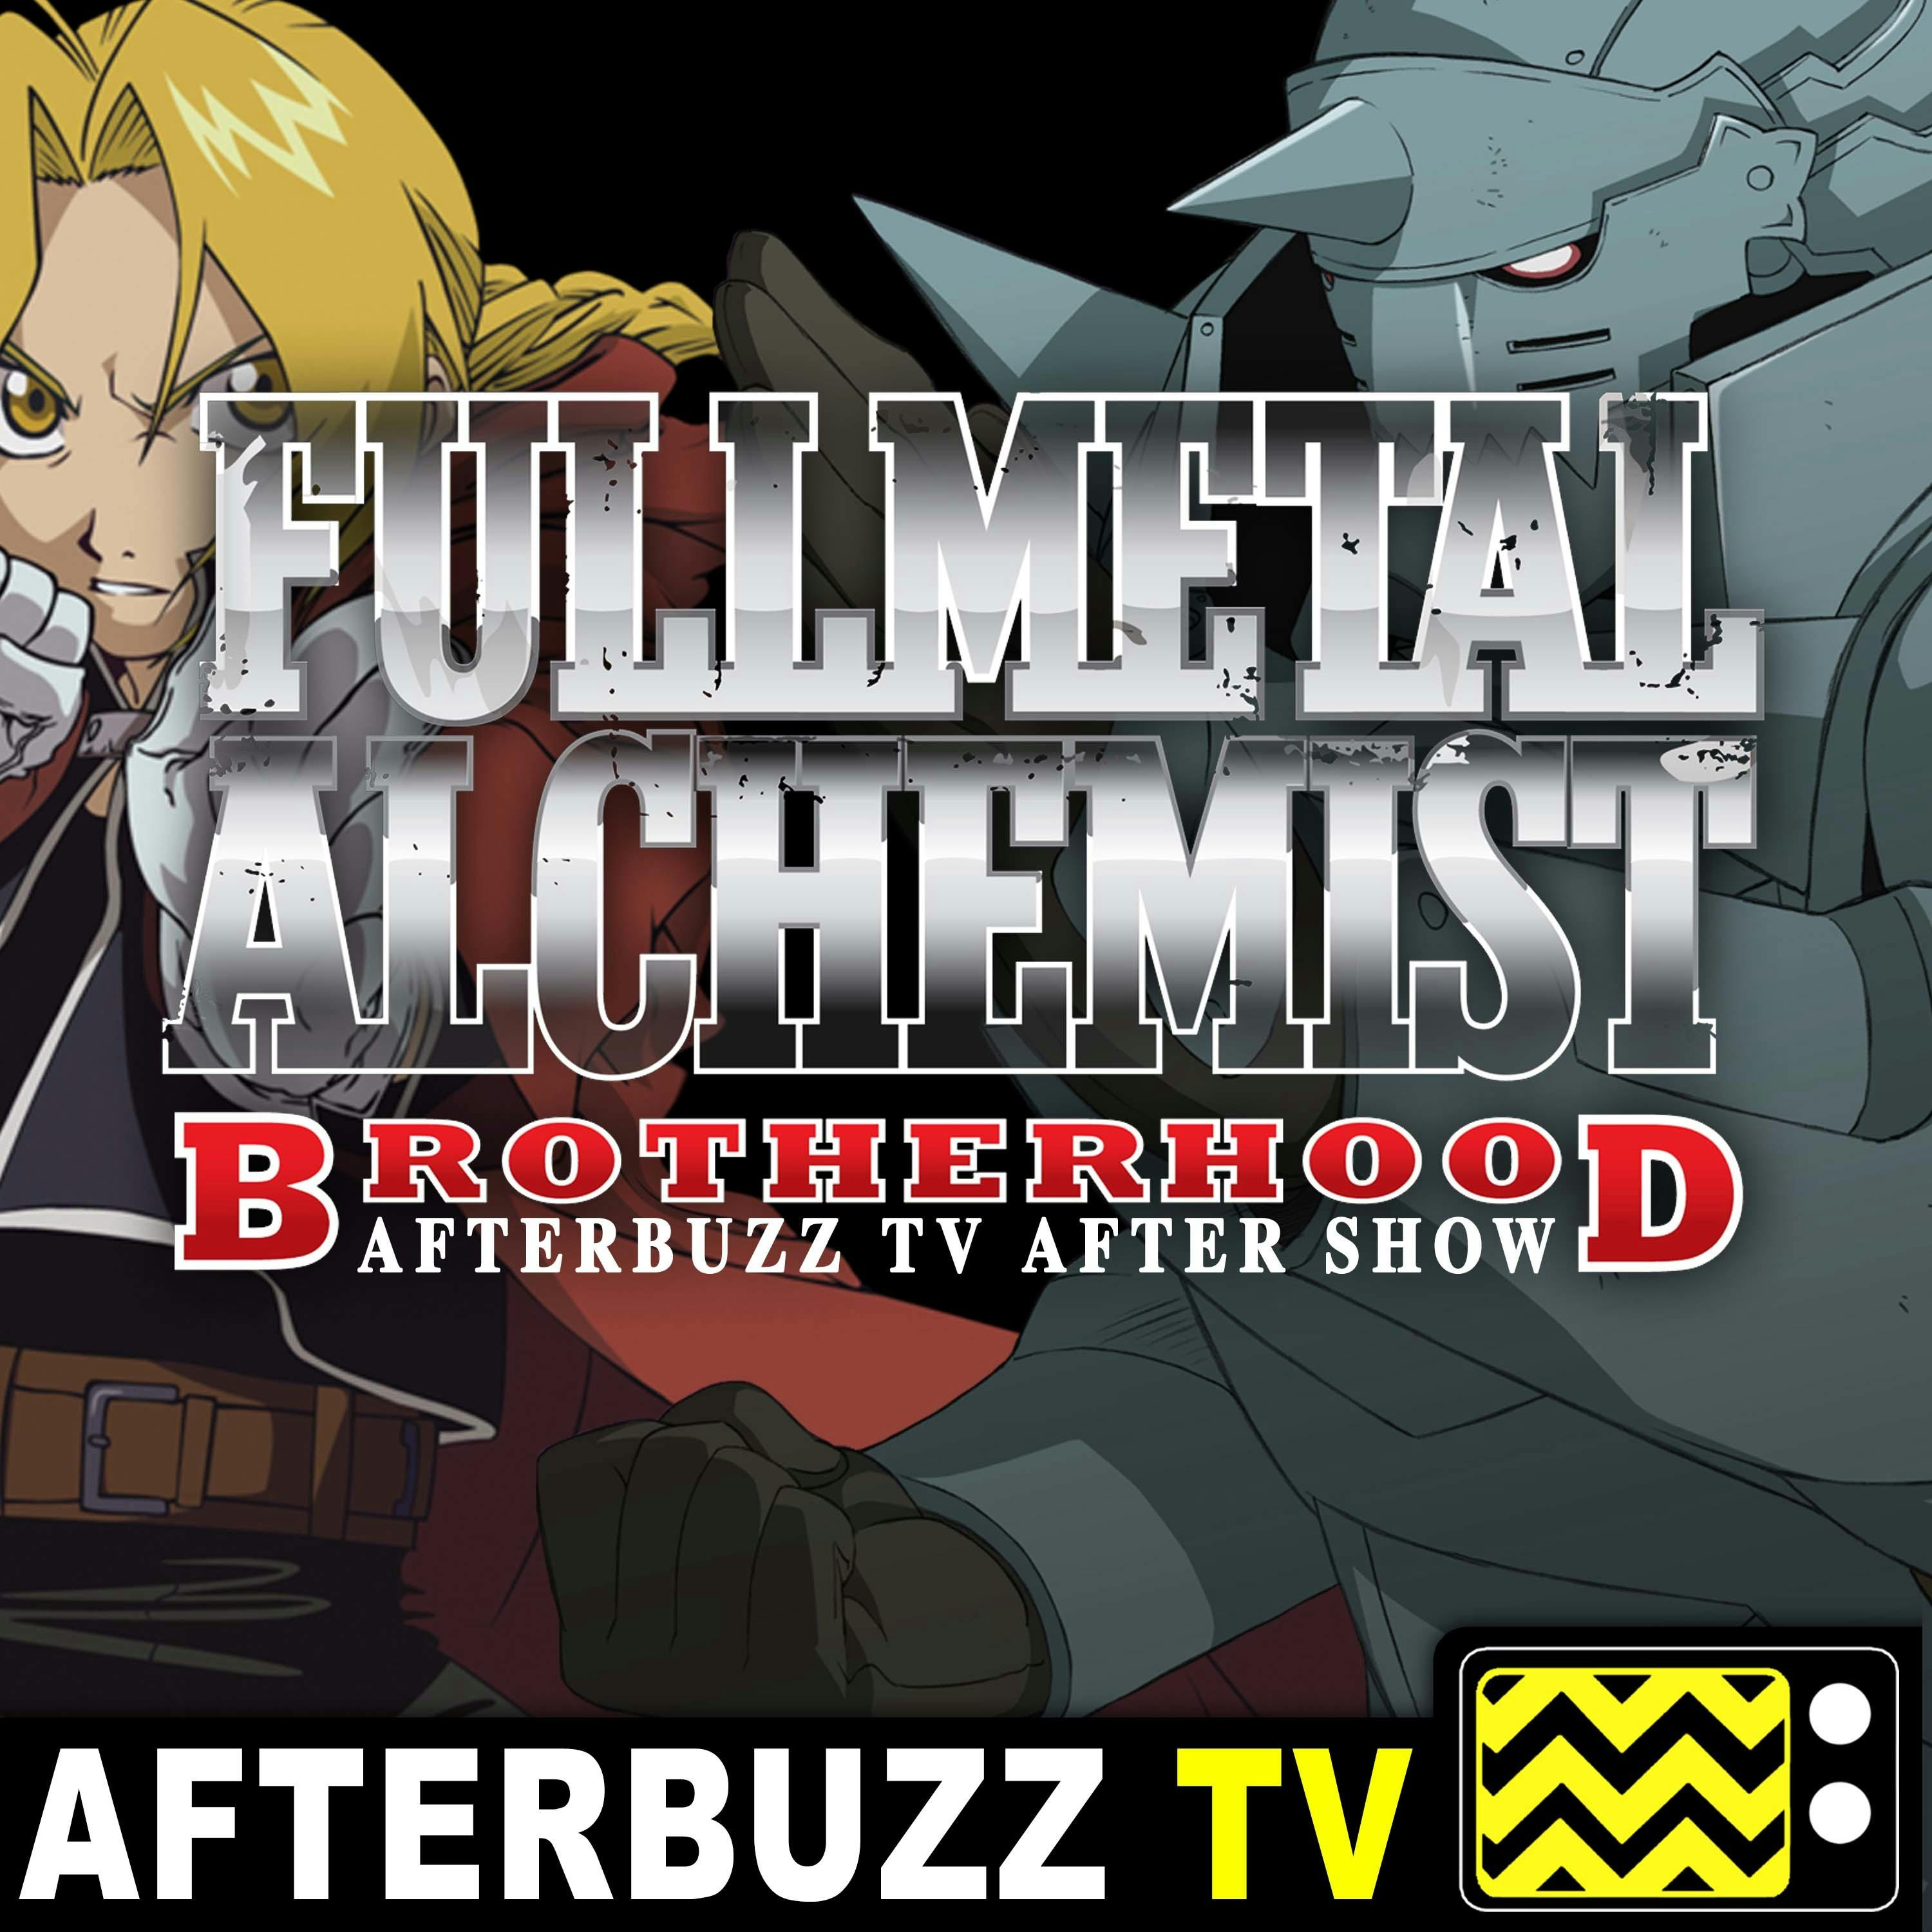 Fullmetal Alchemist: Brotherhood S:1 | Episodes 9 – 13 | AfterBuzz TV AfterShow